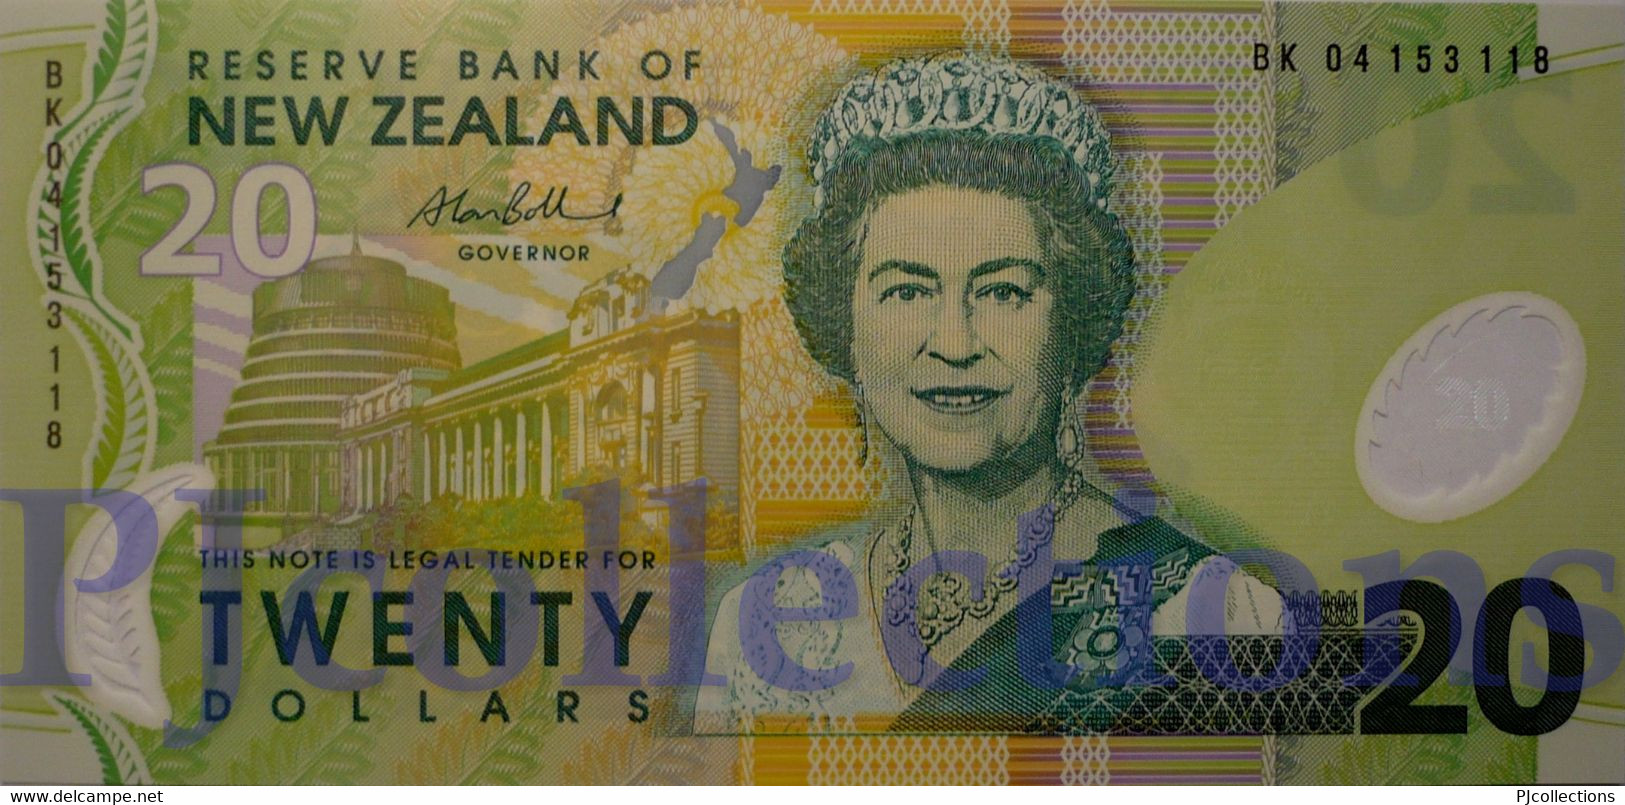 NEW ZEALAND 20 DOLLARS 2004 PICK 187b POLYMER UNC - Neuseeland